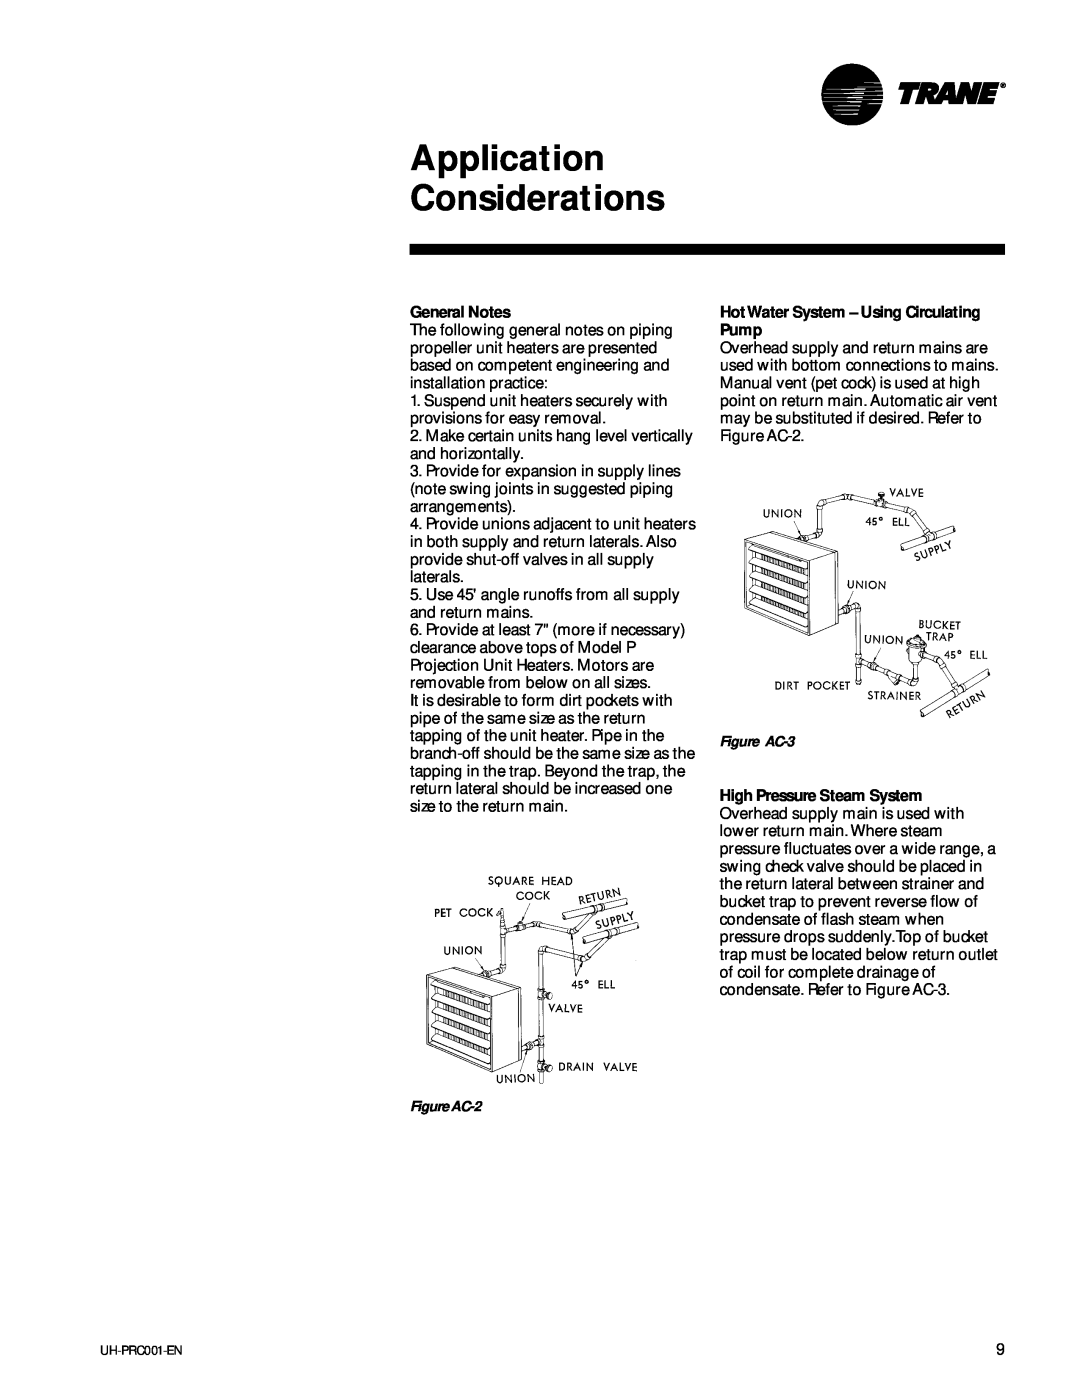 Trane UH-PRC001-EN manual General Notes, HotWater System - Using Circulating Pump, Application Considerations 